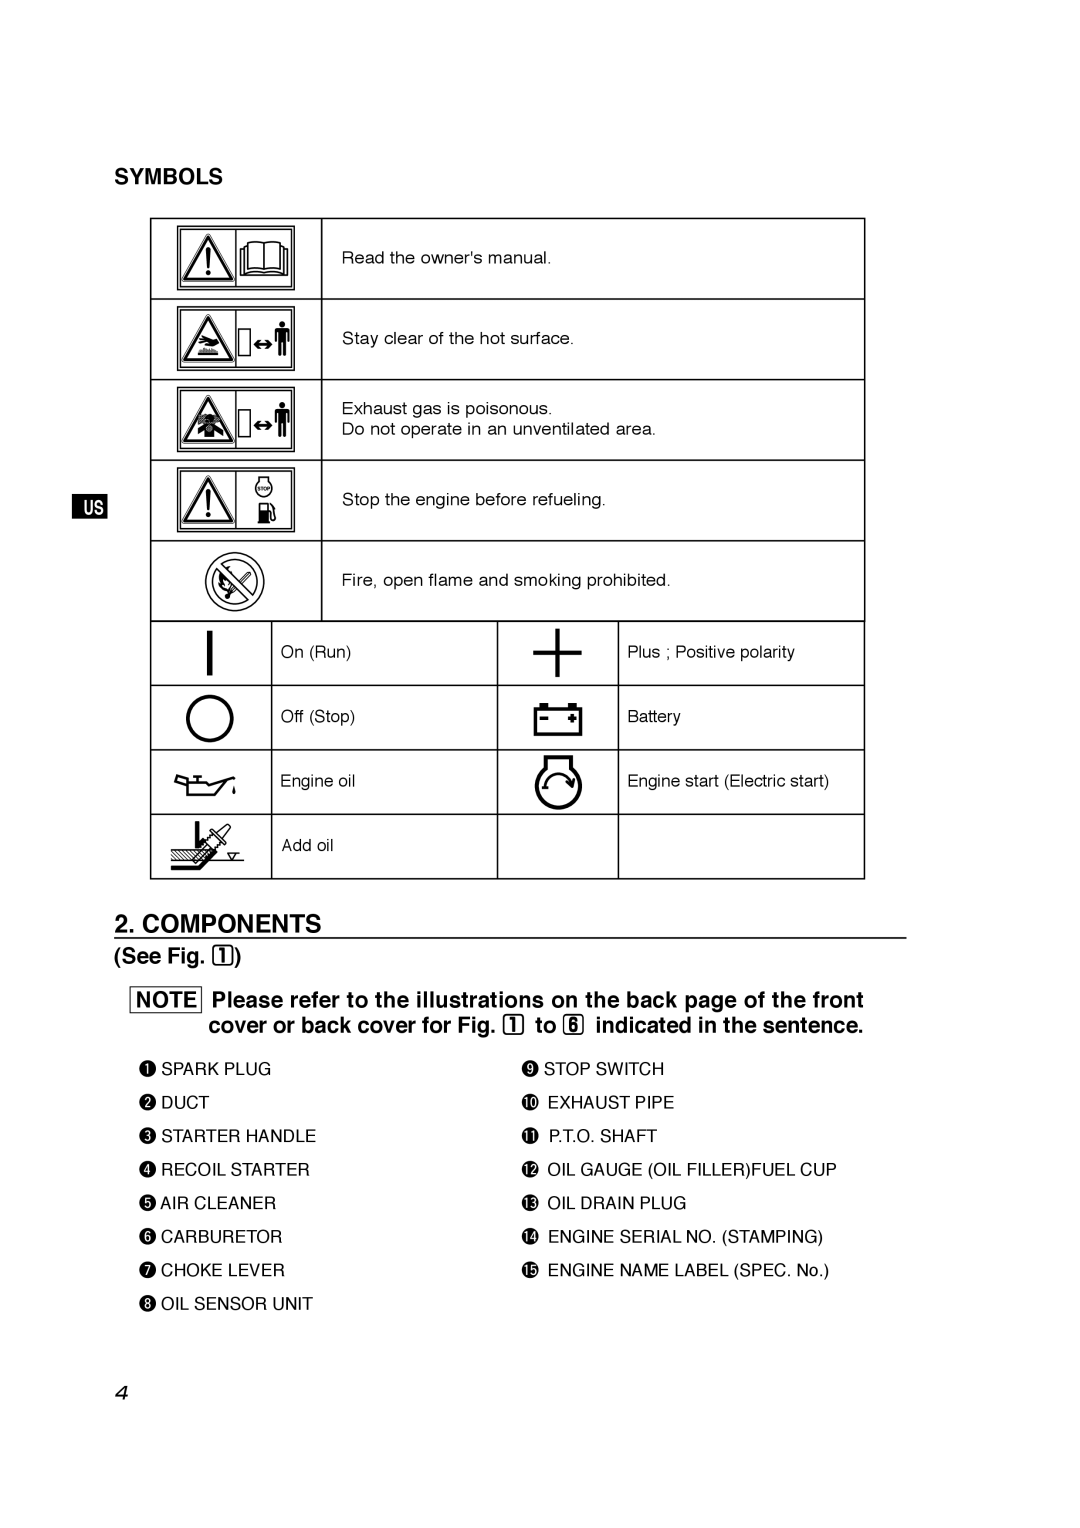 Subaru Robin Power Products EX30 manual Components, Symbols, See Fig 